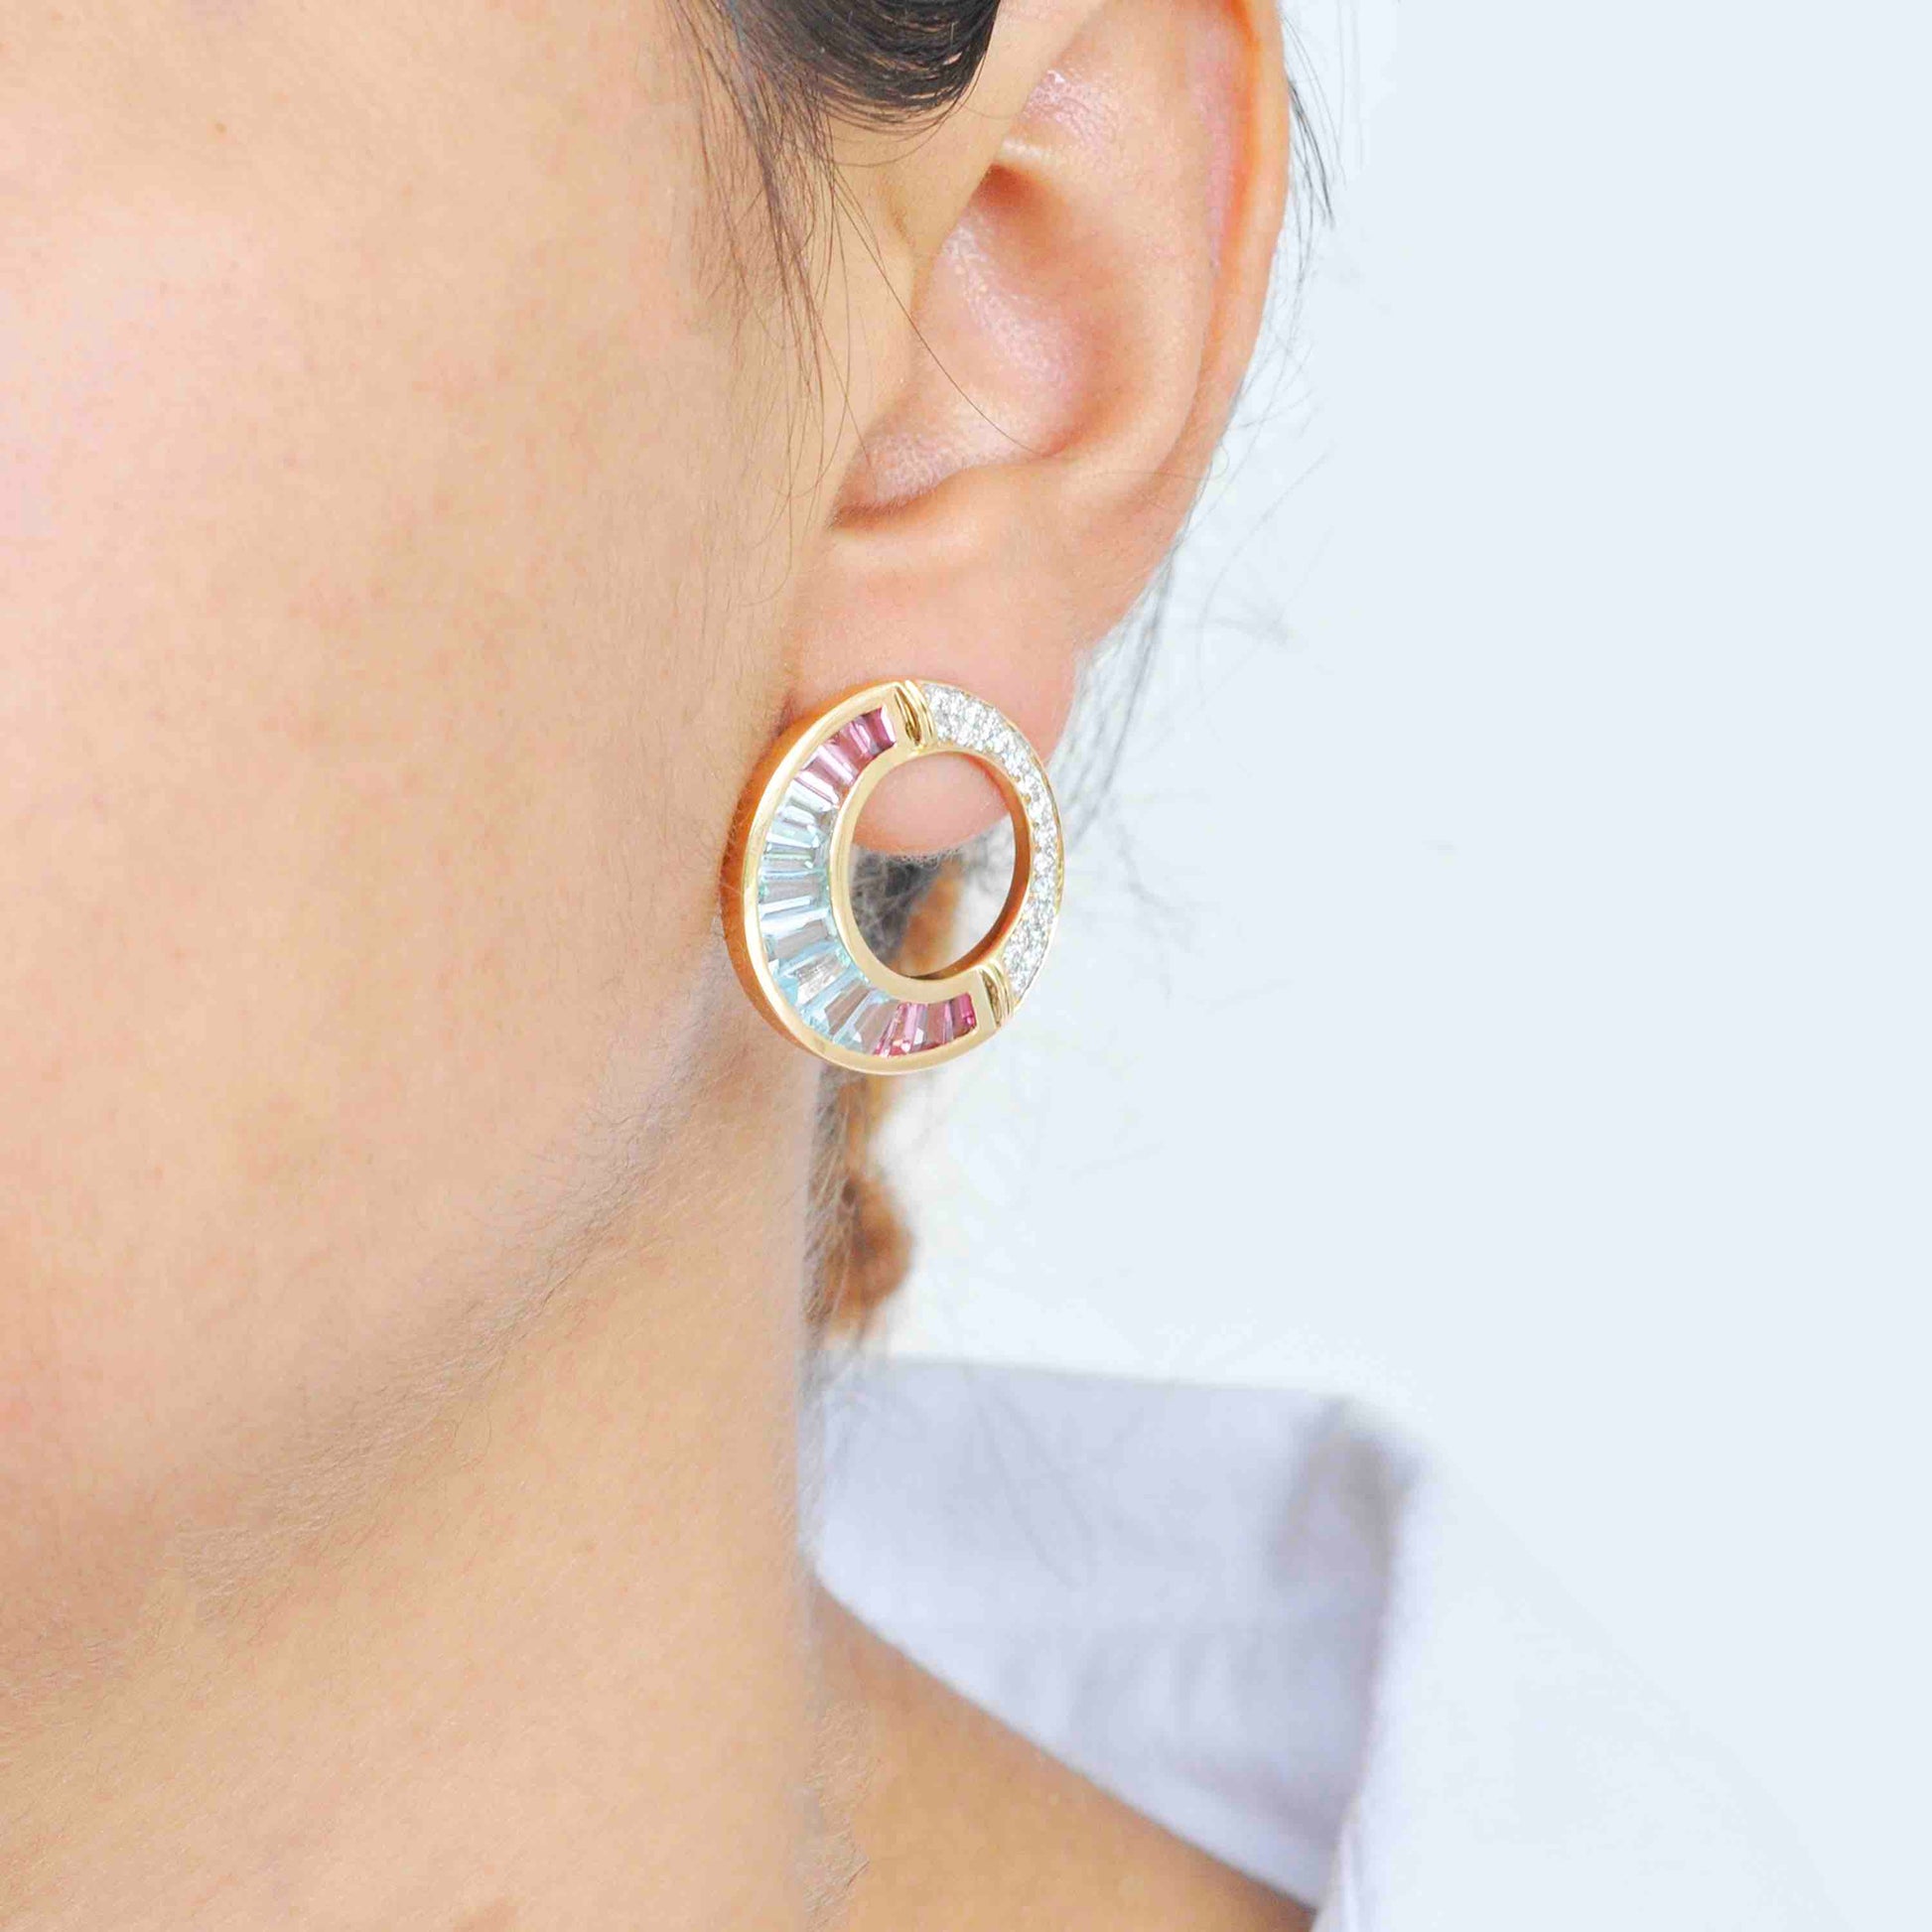 pink tourmaline earrings yellow gold